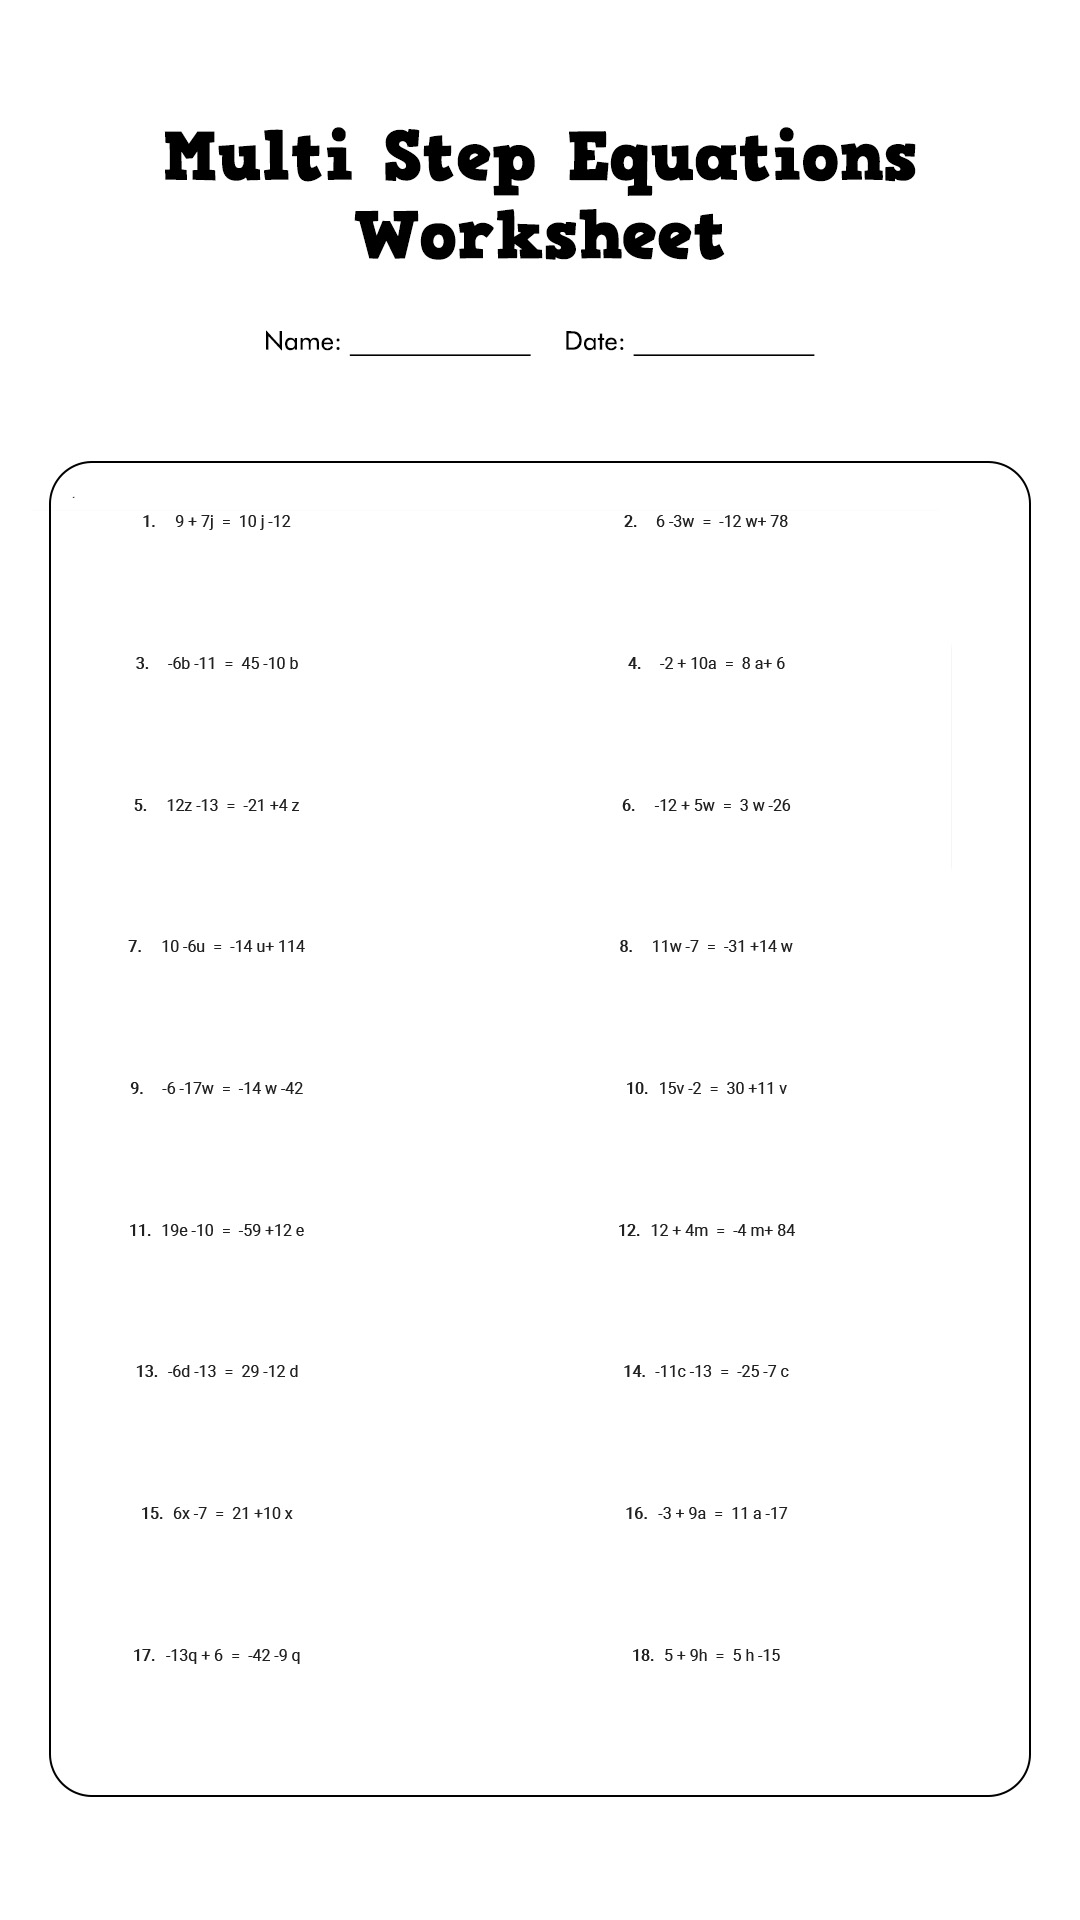 Multi-Step Equations Worksheet PDF Image